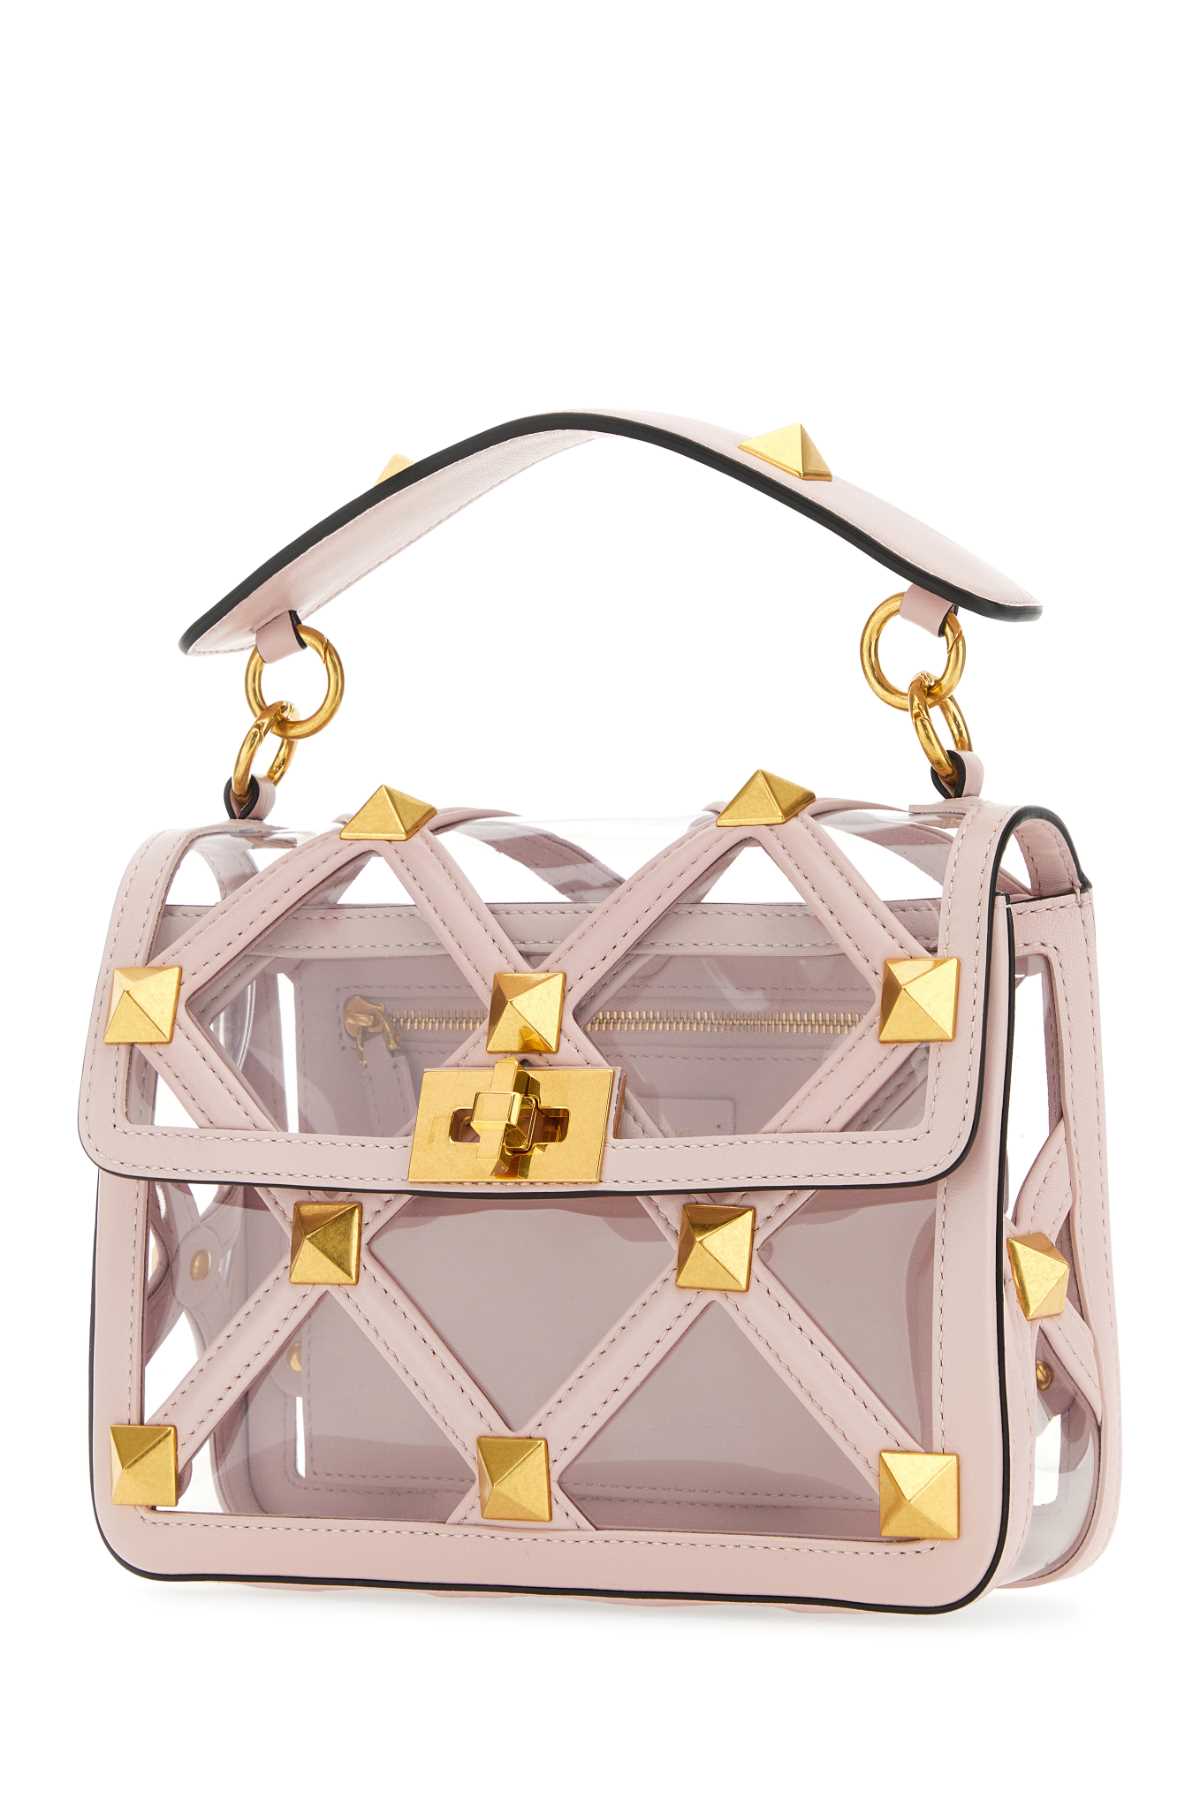 Valentino Garavani Pastel Pink Polymeric Material And Leather Medium Roman Stud Handbag In Yl0